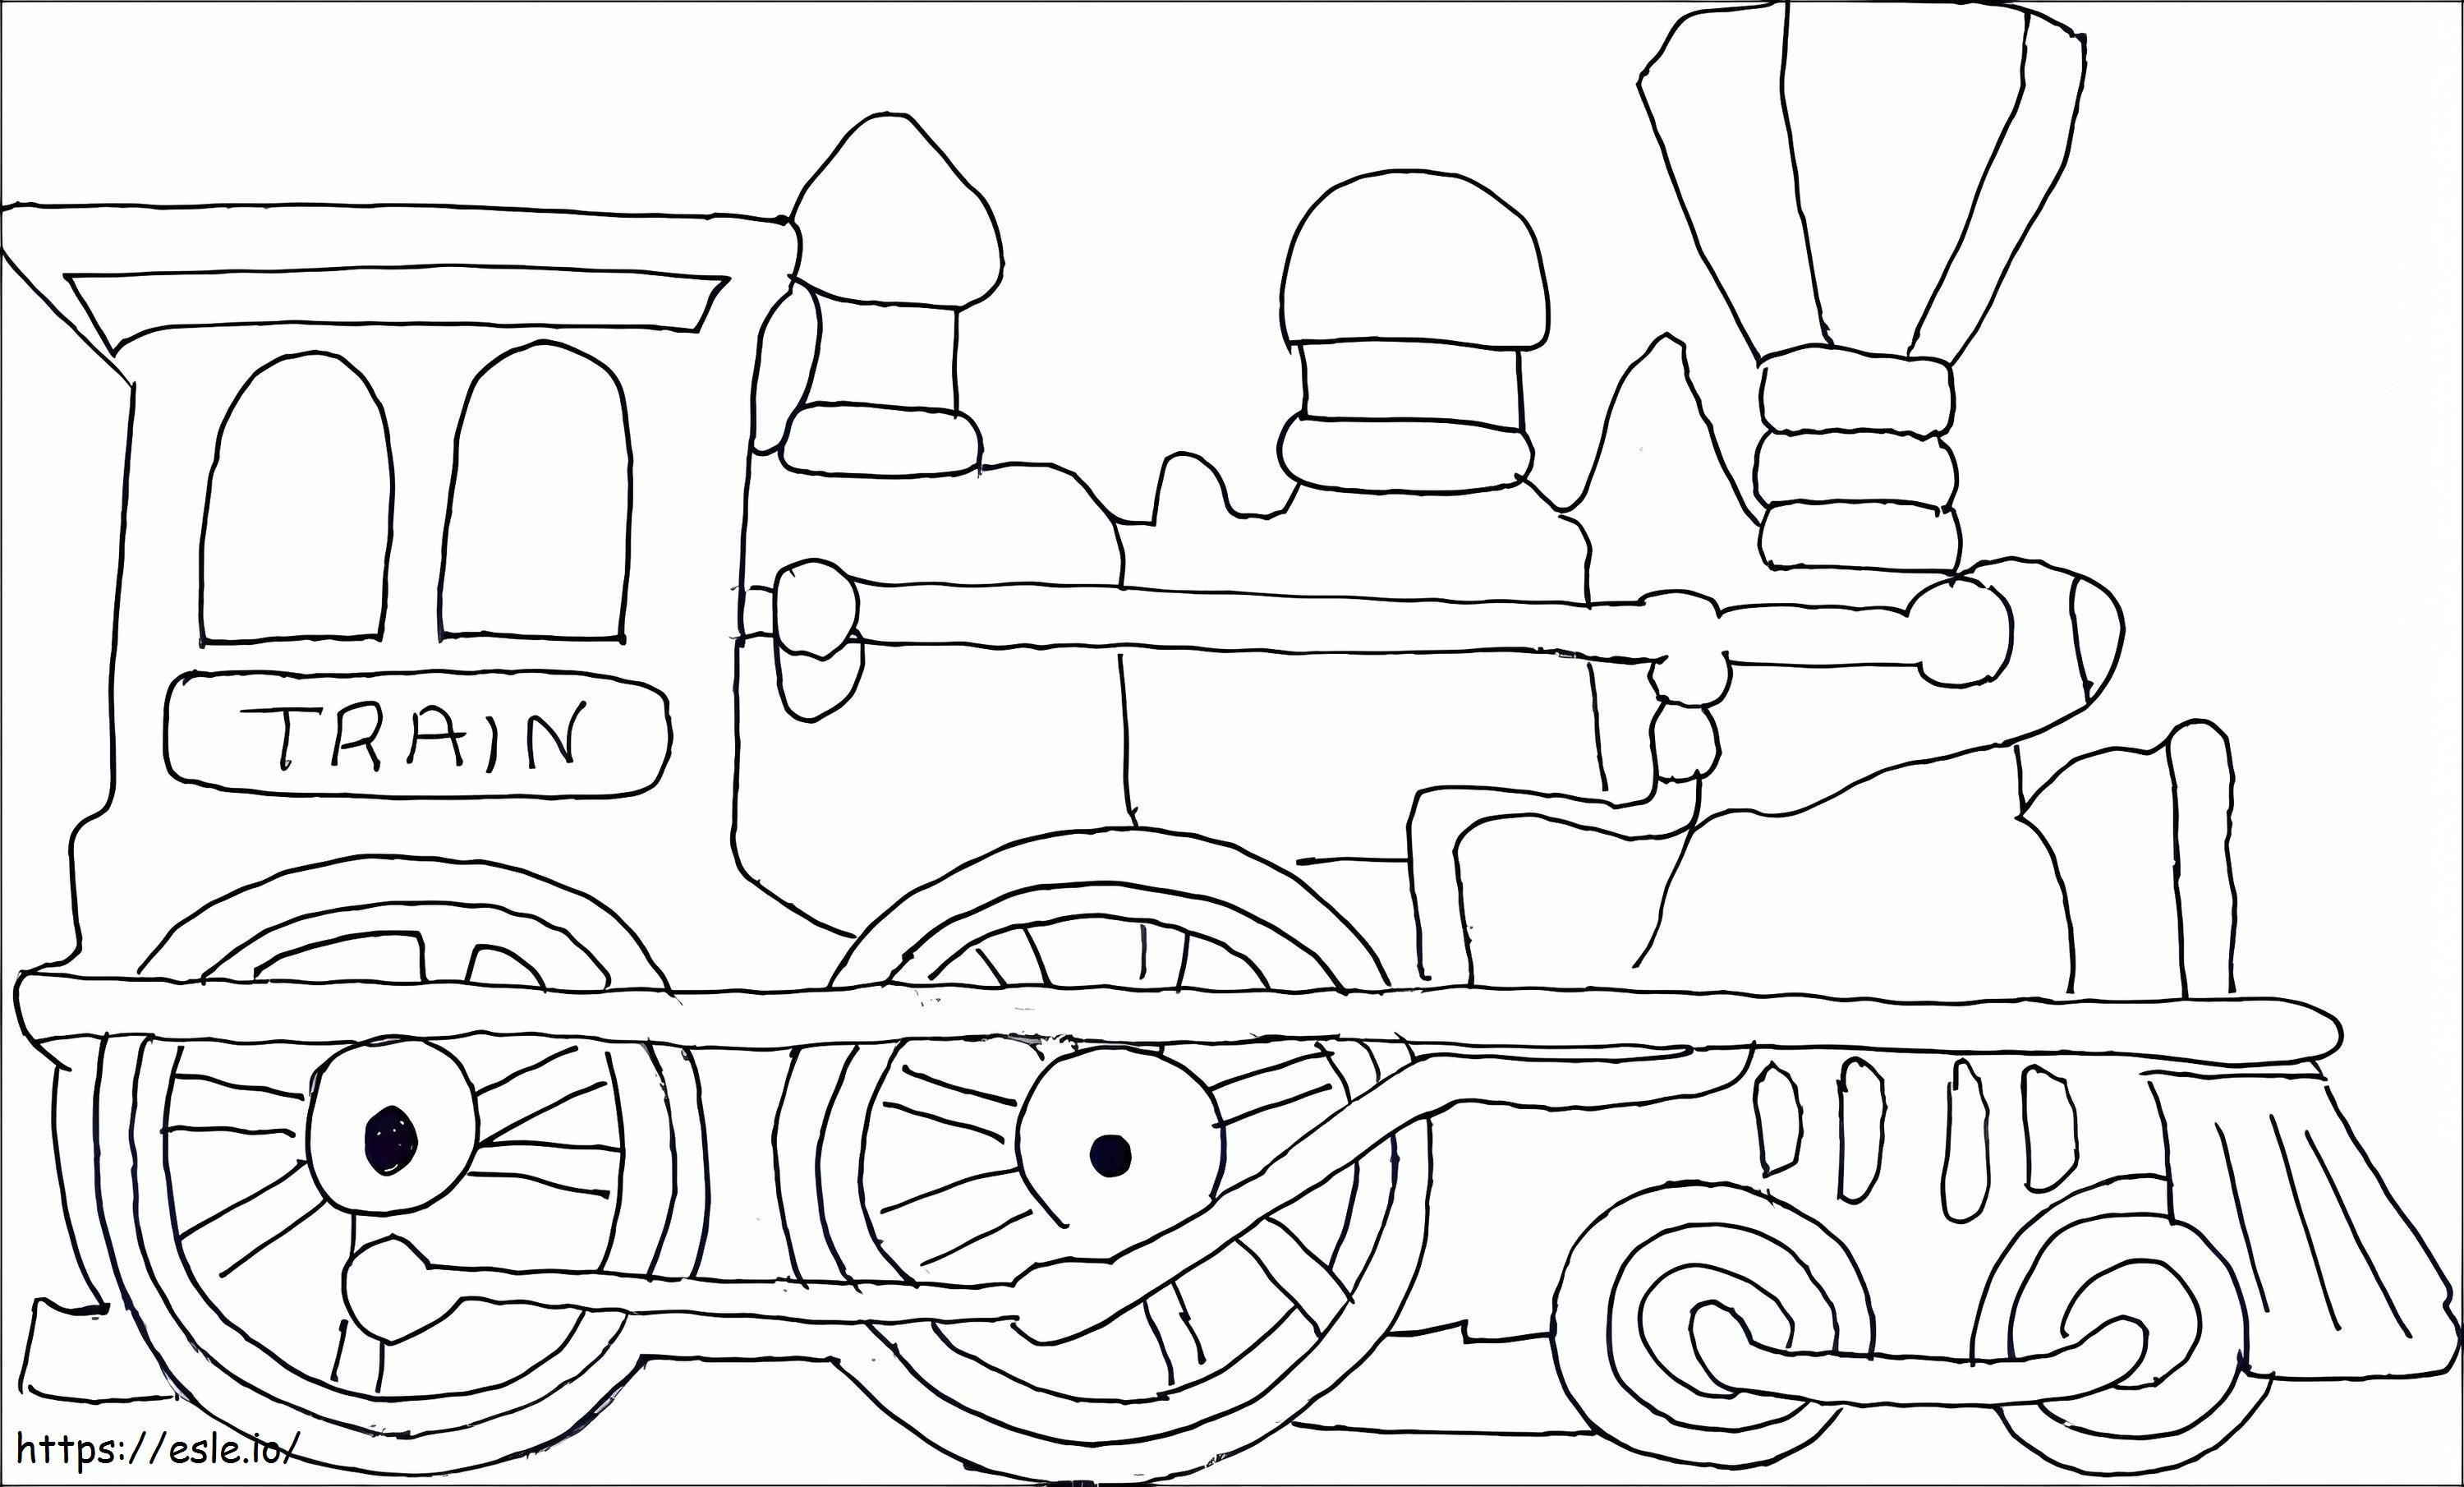 Coloriage Train normal à imprimer dessin